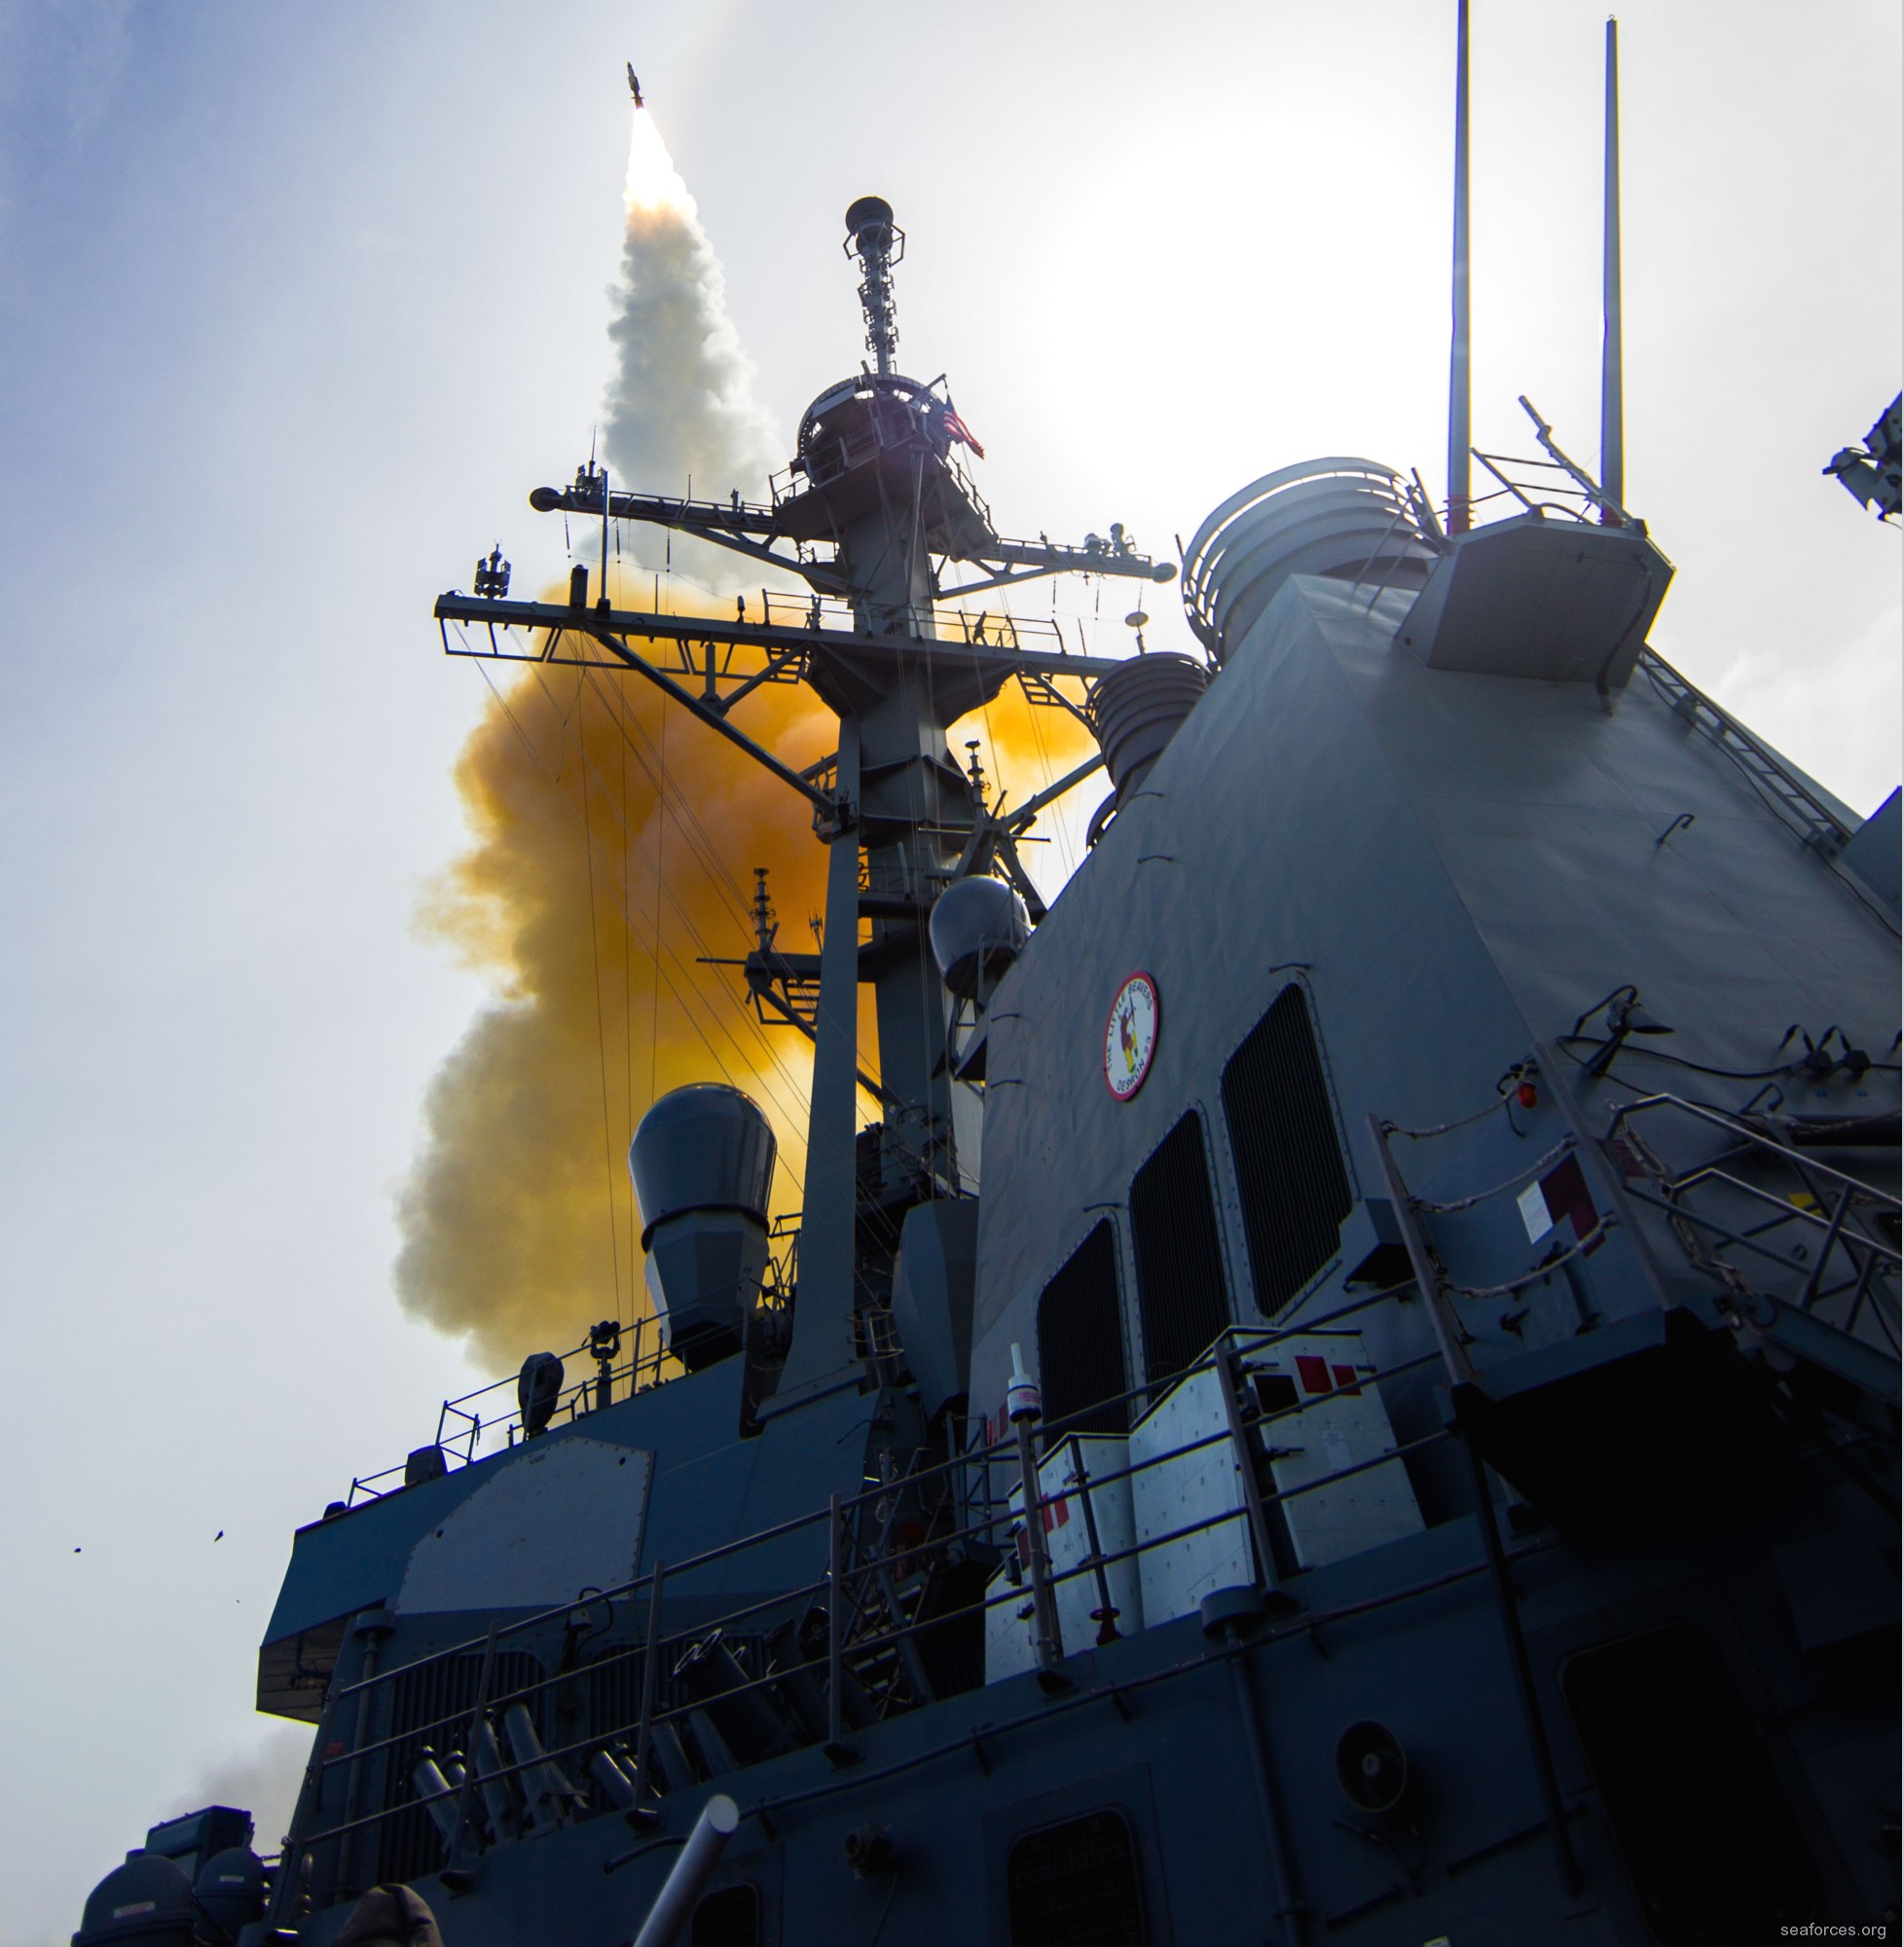 ddg-53 uss john paul jones destroyer us navy 05 aegis ballistic missile defense system